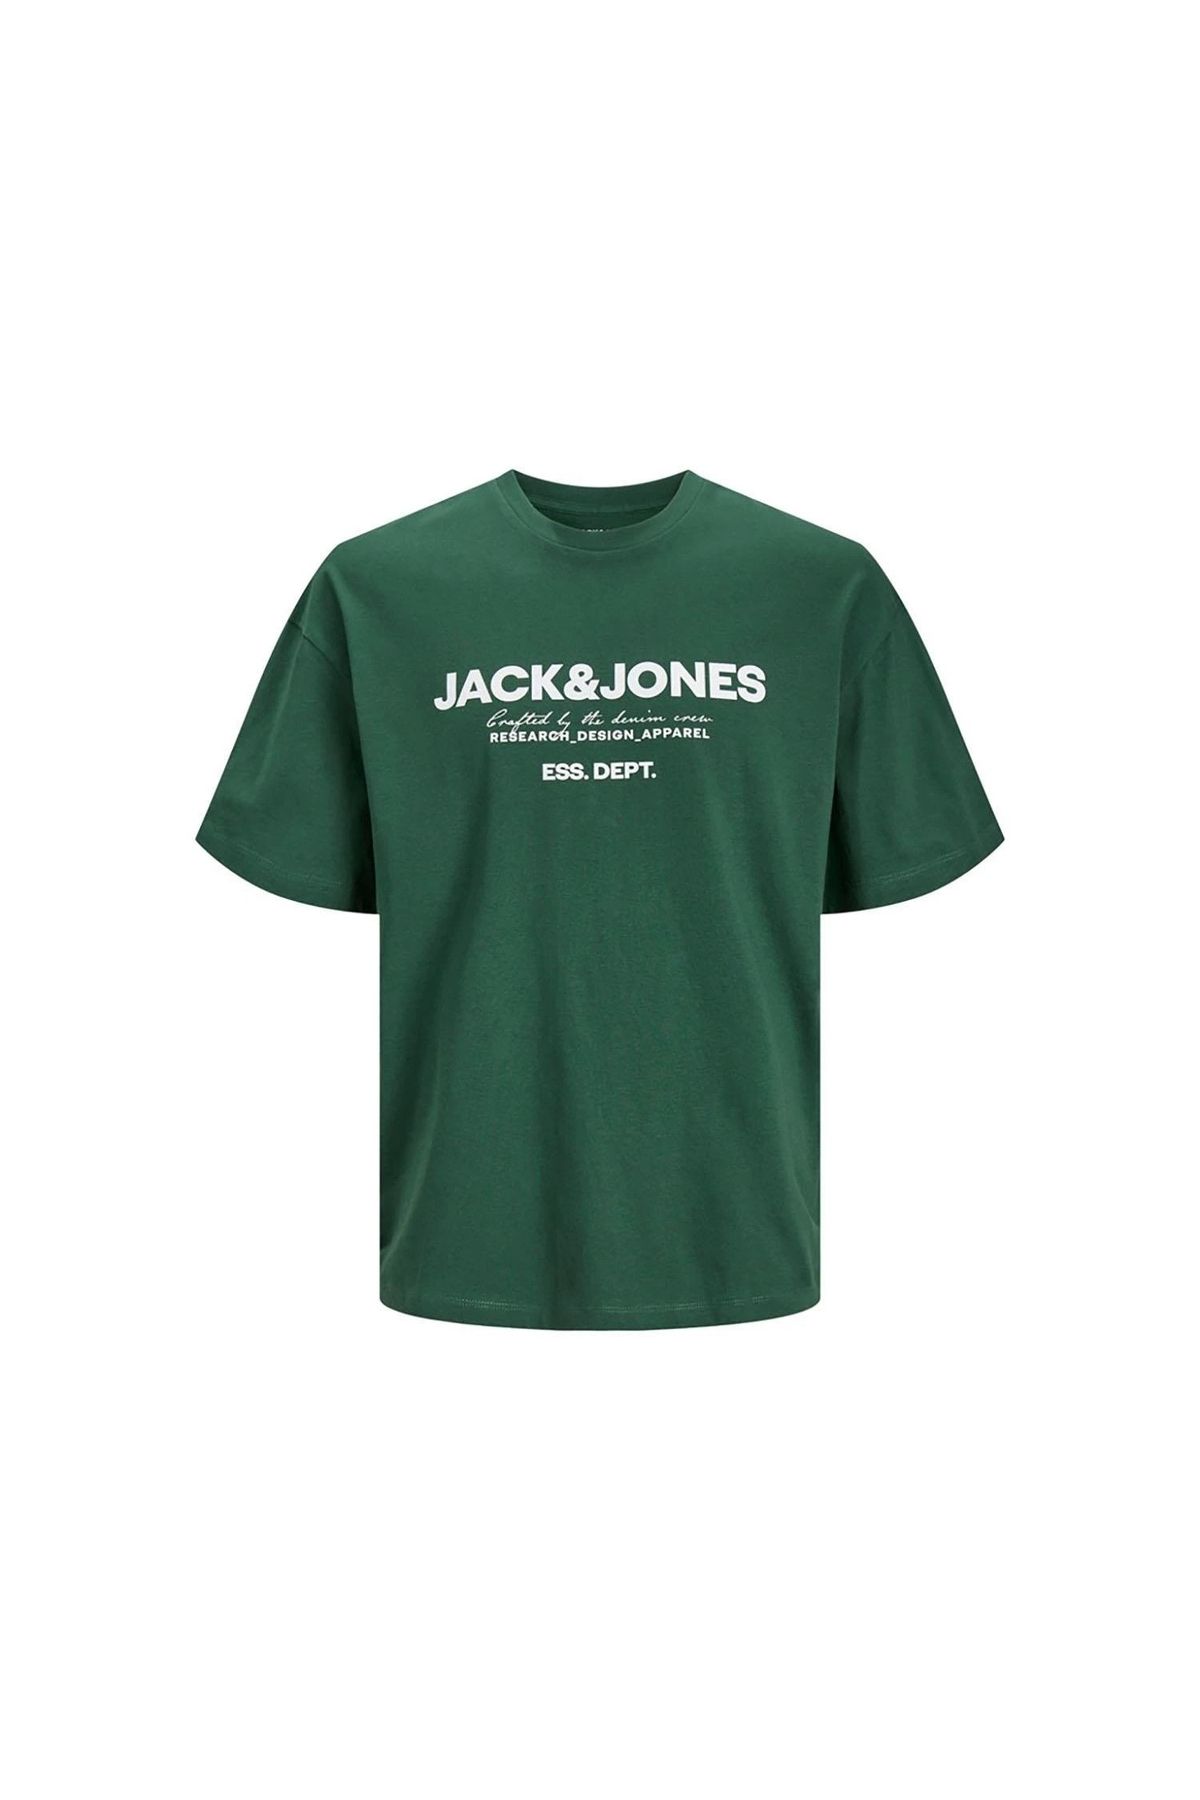 Jack & Jones Jack&jones 12247782 0 Yaka Erkek Tshirt - Yesil